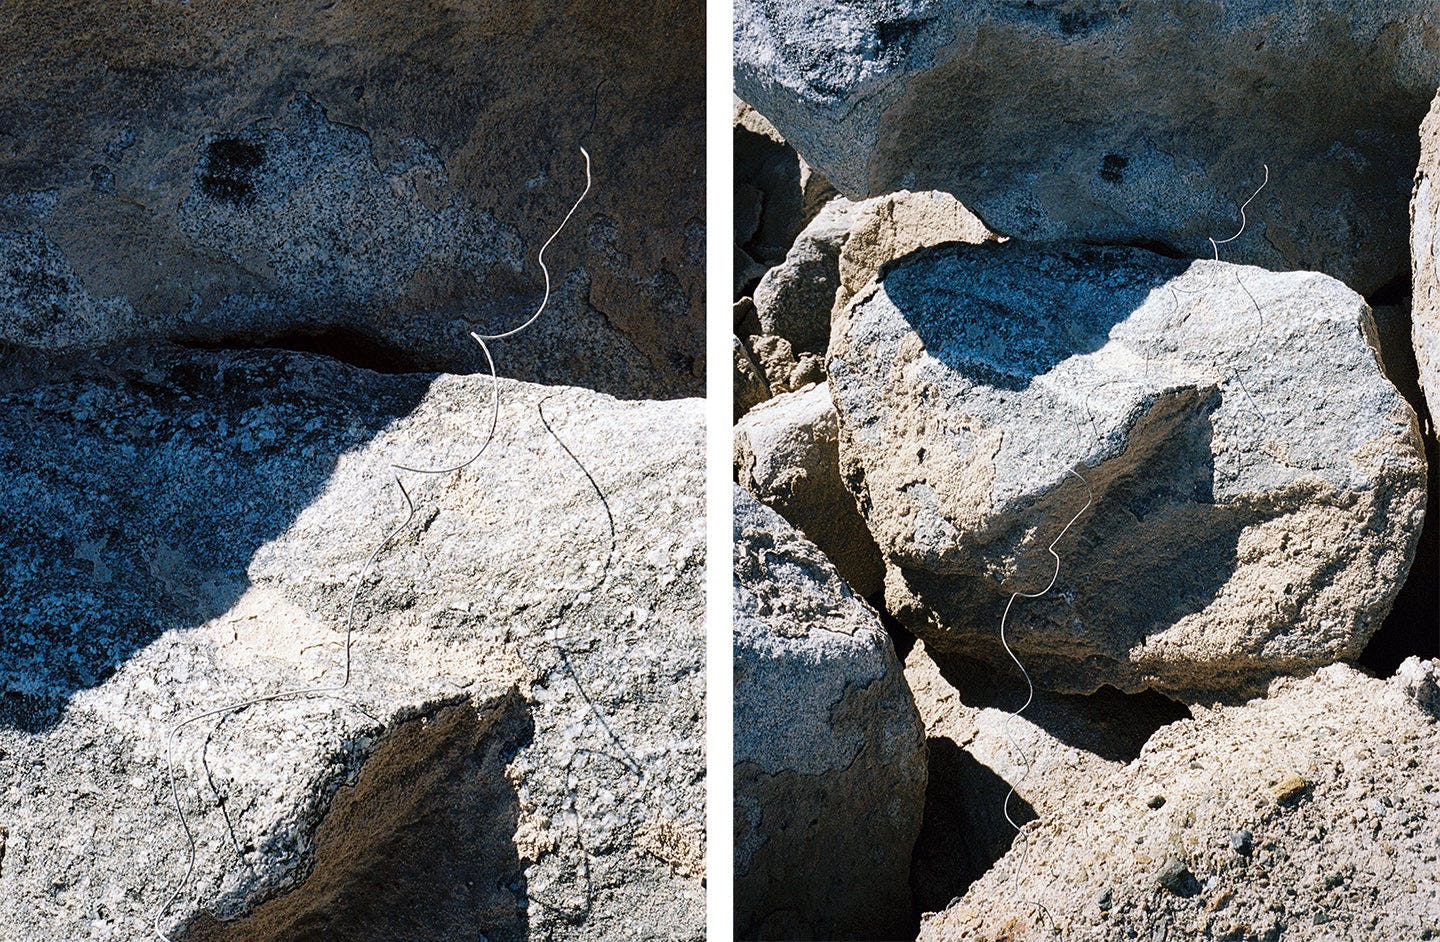 Photography by Ryan James MacFarland titled "Dilemma (Salton Sea)".